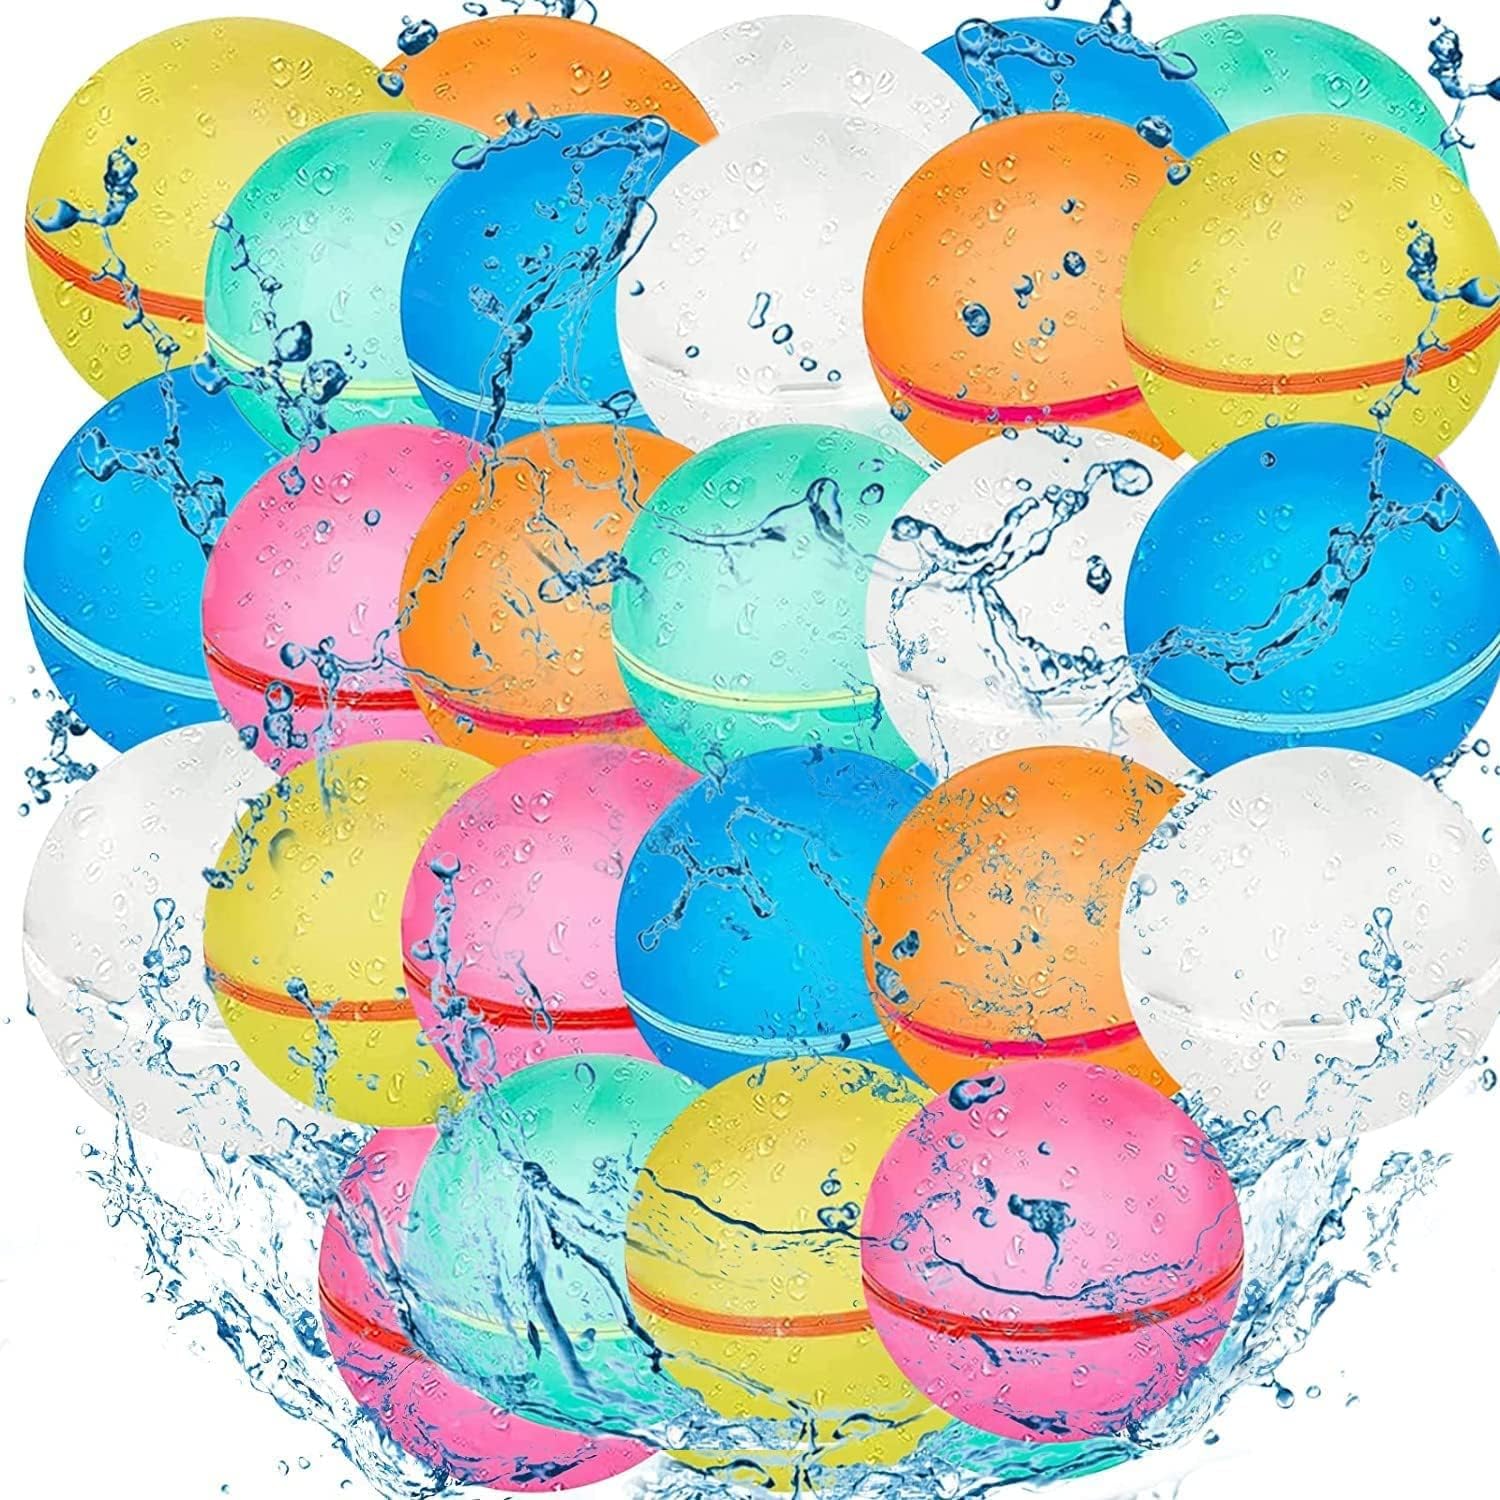 Yohica - 24 globos de agua reutilizables